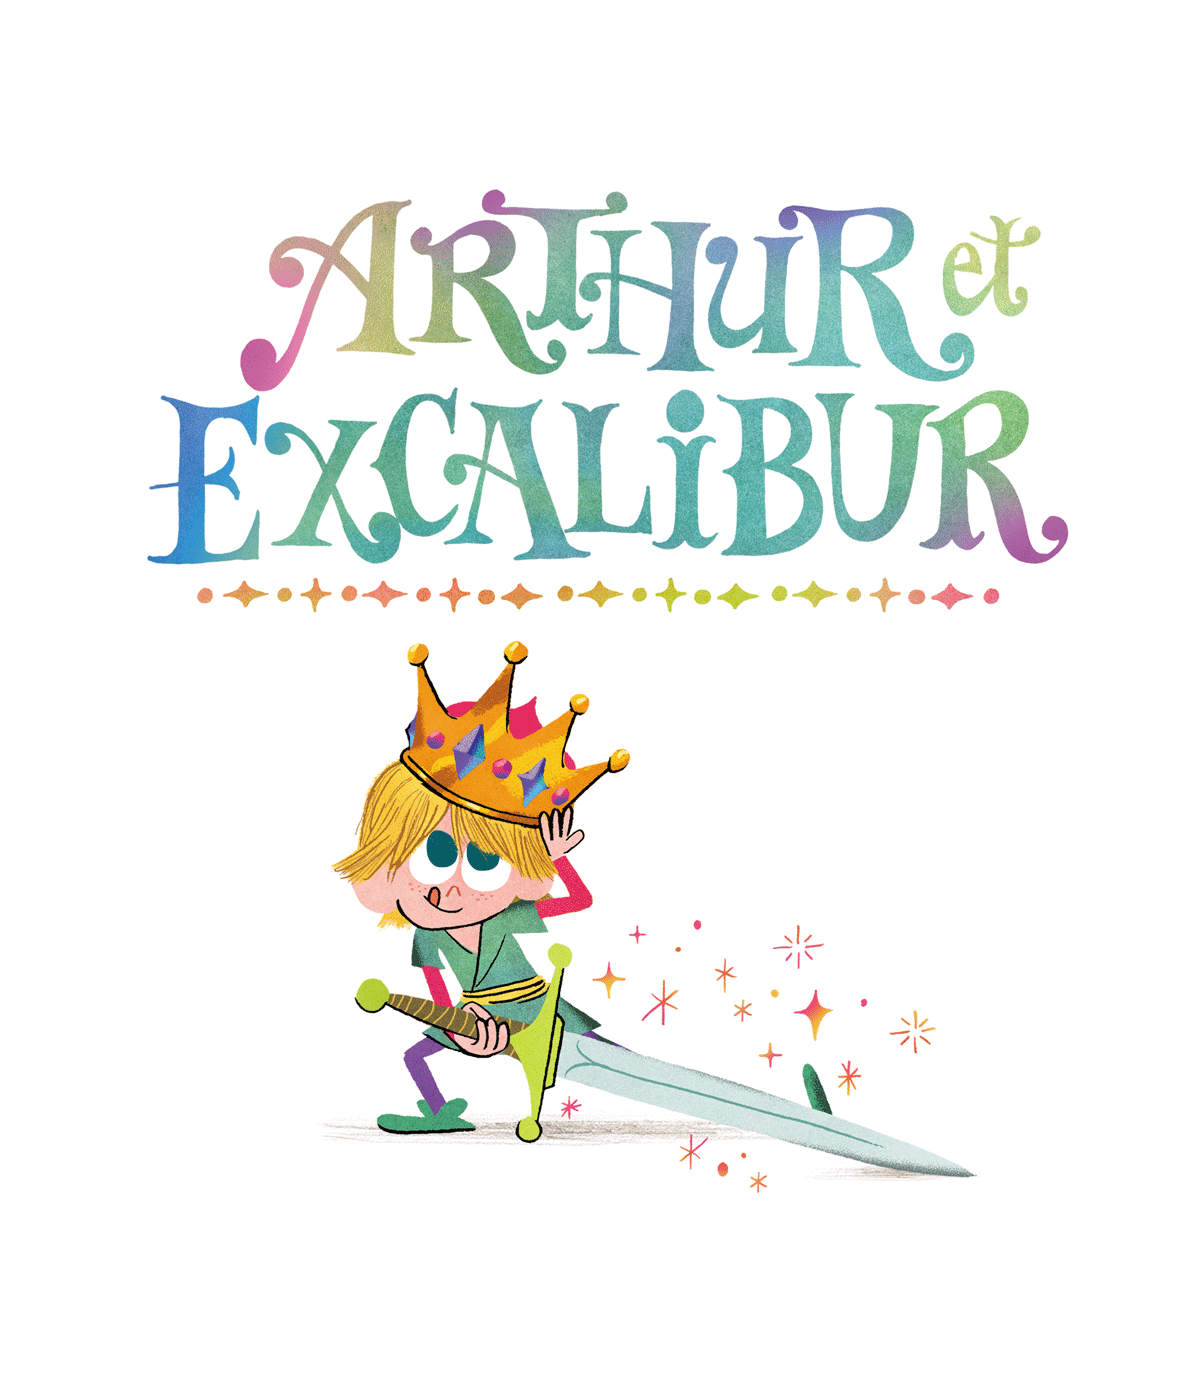 tale book children book children magazine Arthur King excalibur